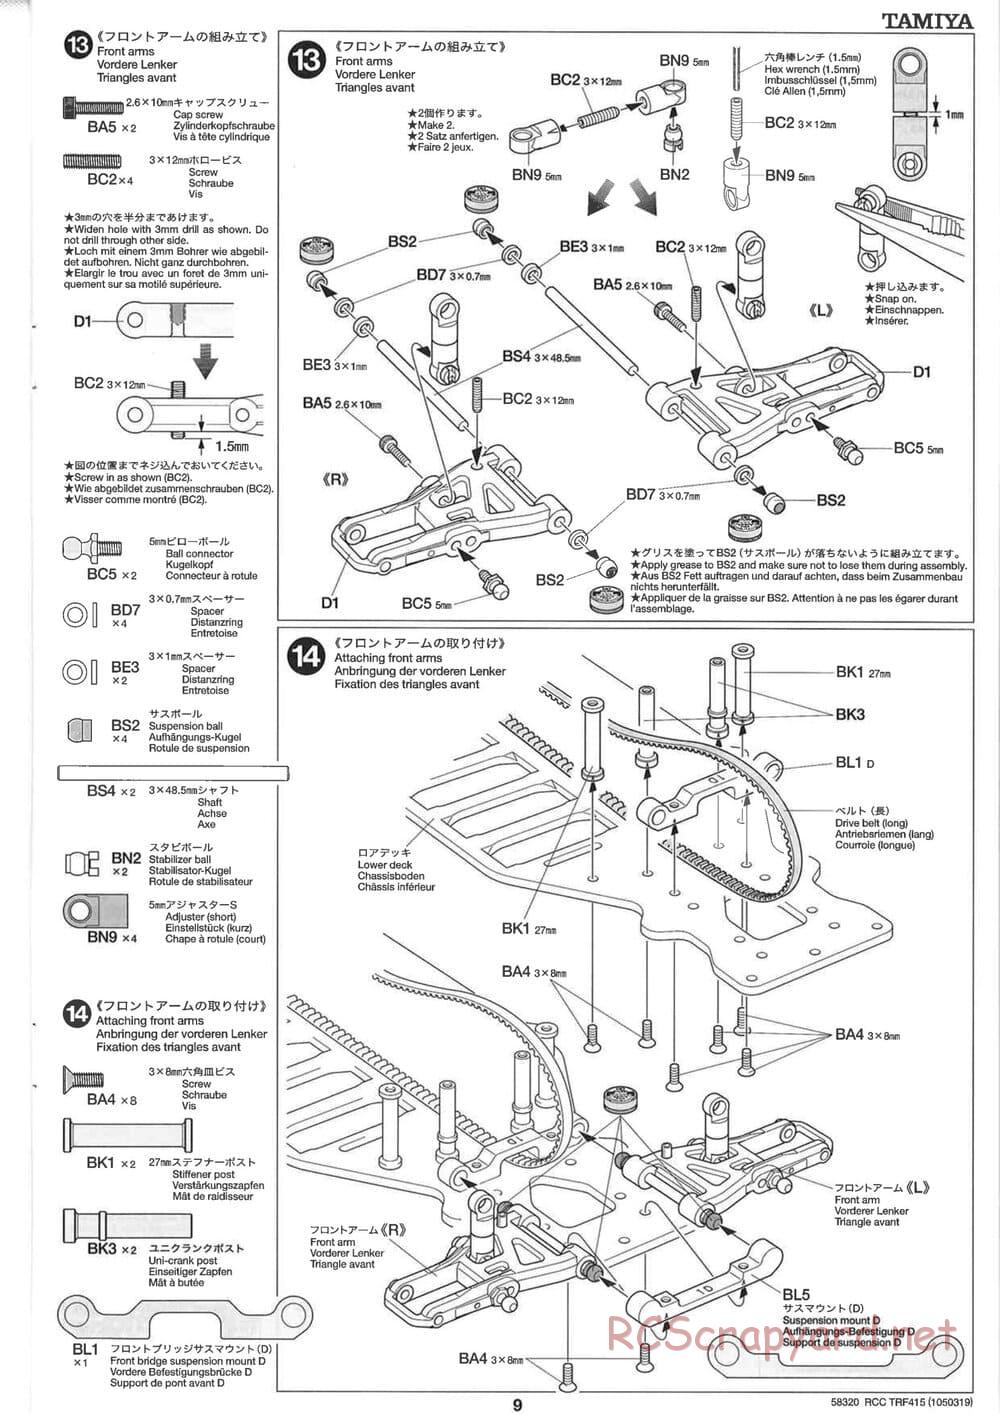 Tamiya - TRF415 Chassis - Manual - Page 9